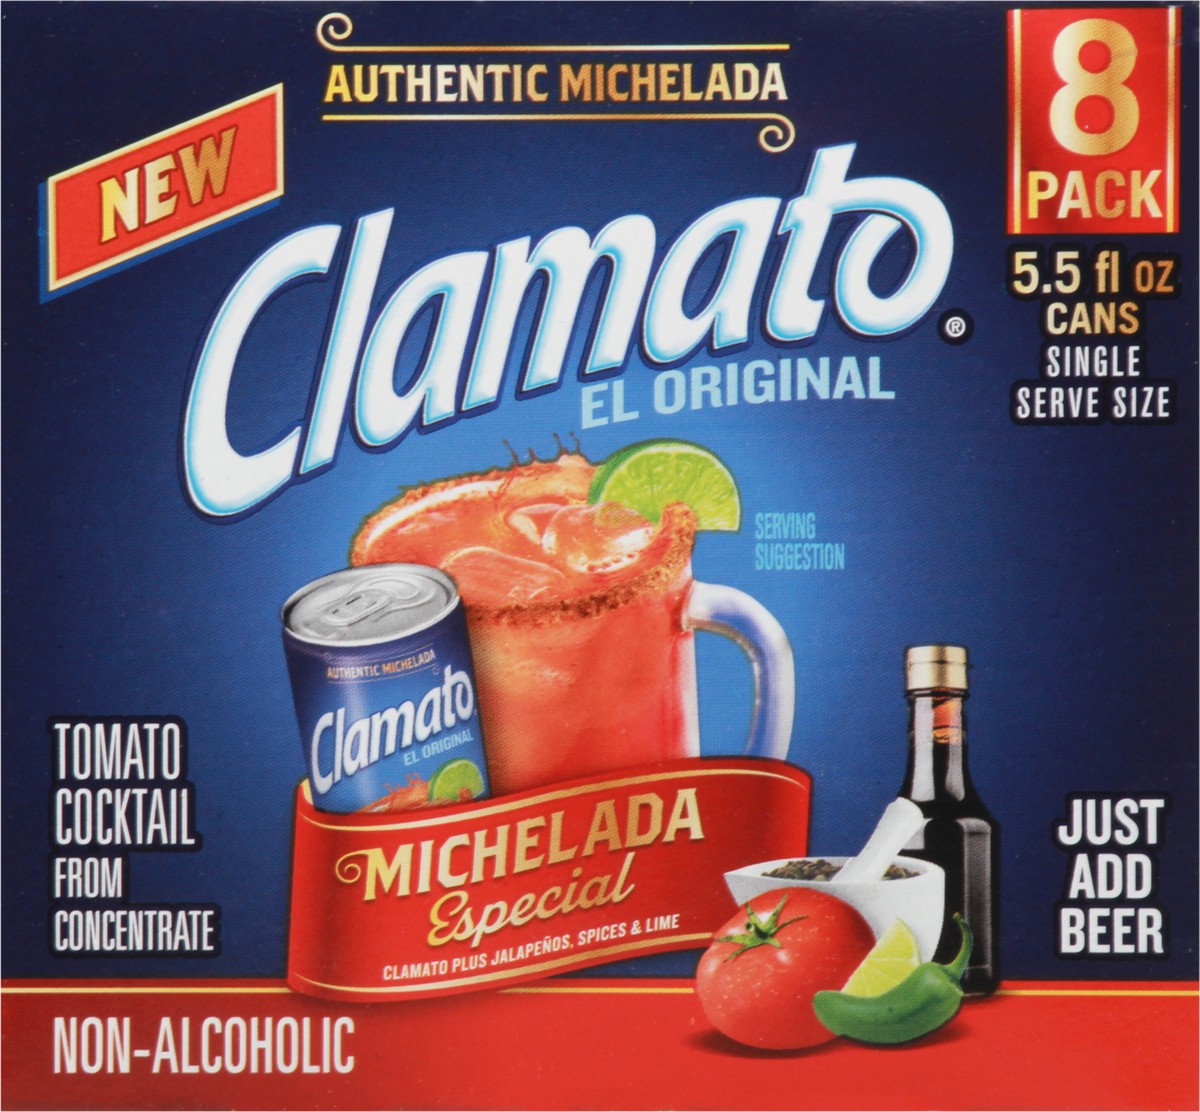 slide 6 of 10, Clamato El Original Michelada Especial 5.5 oz Cans, 8 ct